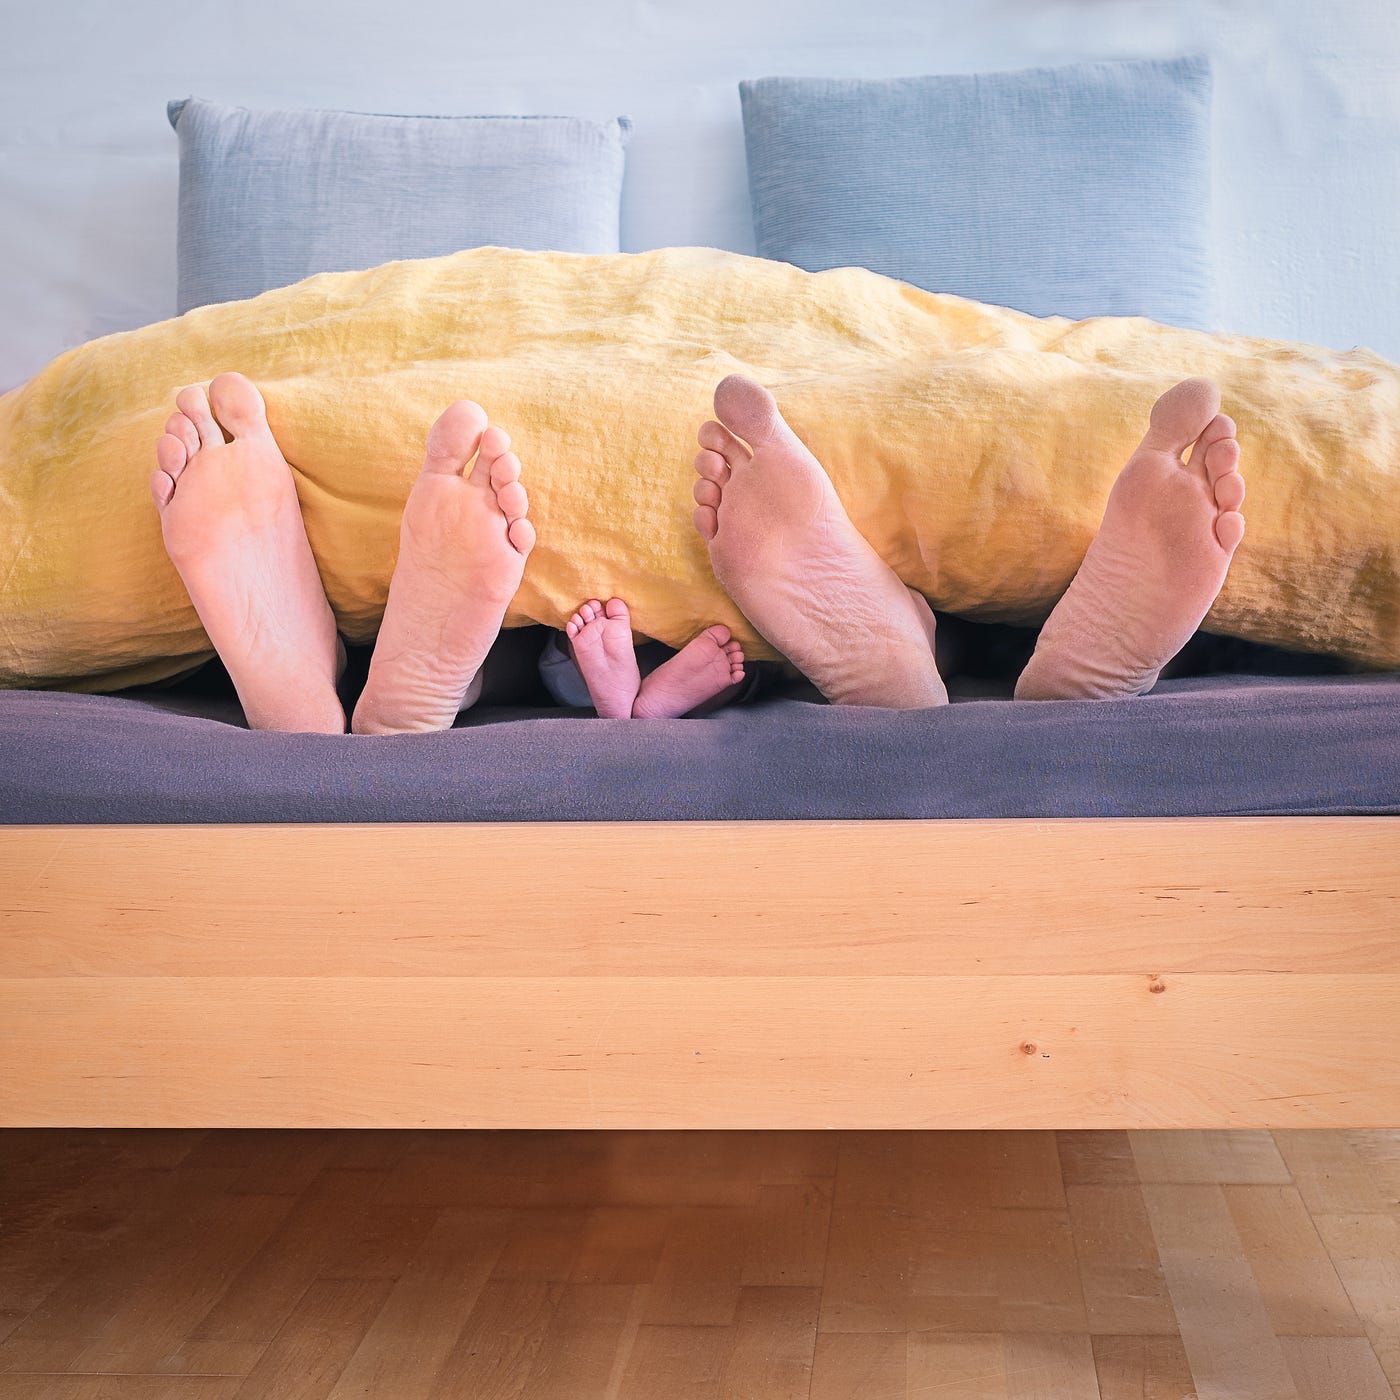 DO WE SLEEP BETTER WITH SOCKS OR BAREFOOT? SHOULD YOU WEAR SOCKS TO BED?, by Dr. Alexander Zeuke, Dr.Alexander Zeuke